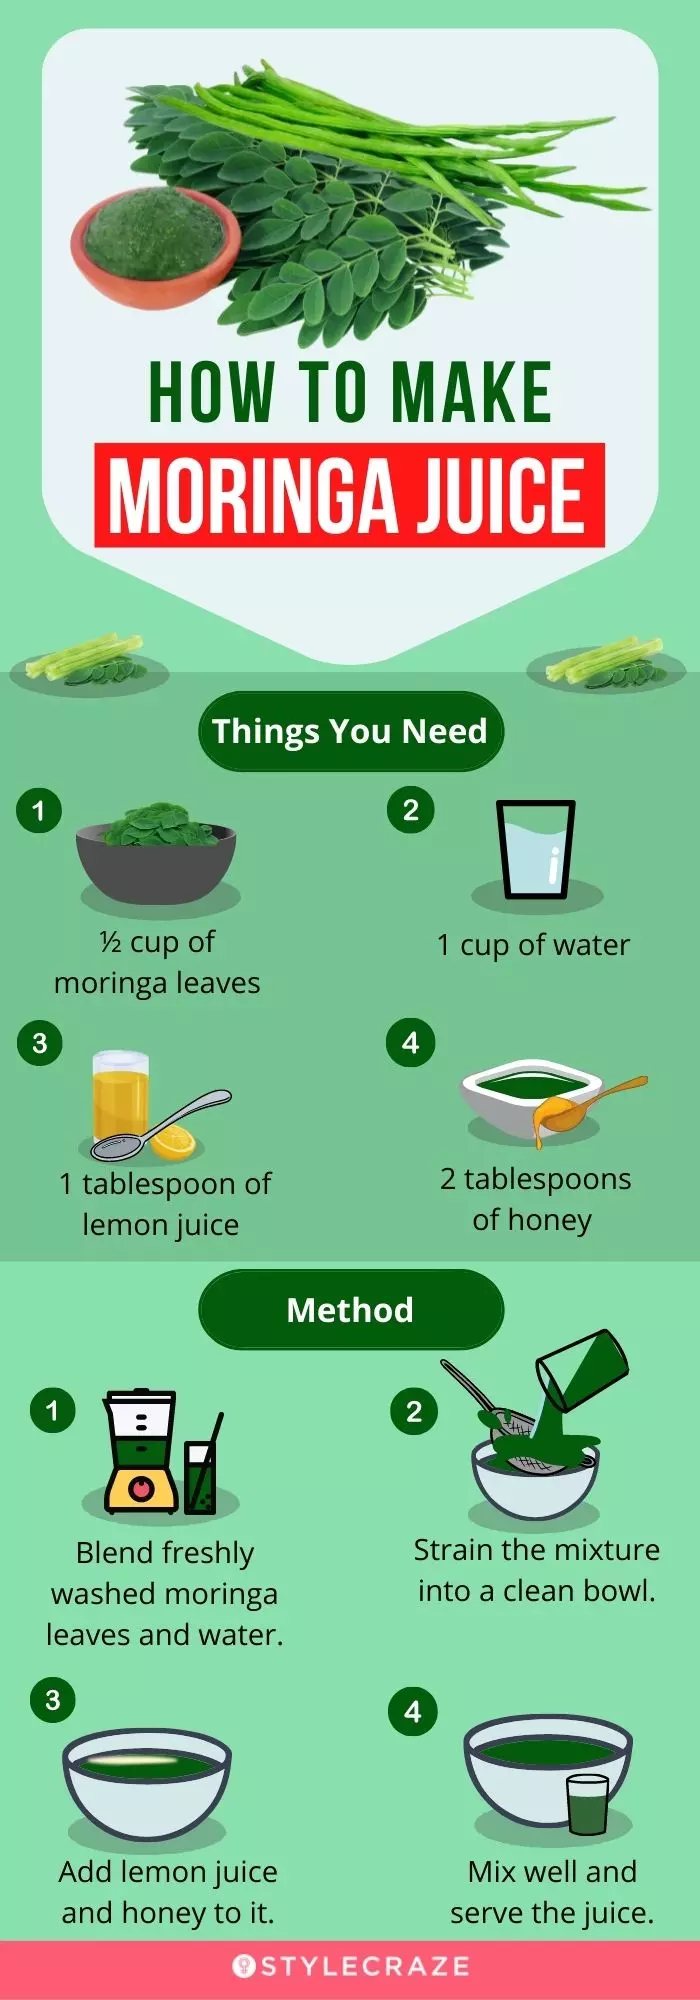 how to make moringa juice (infographic)